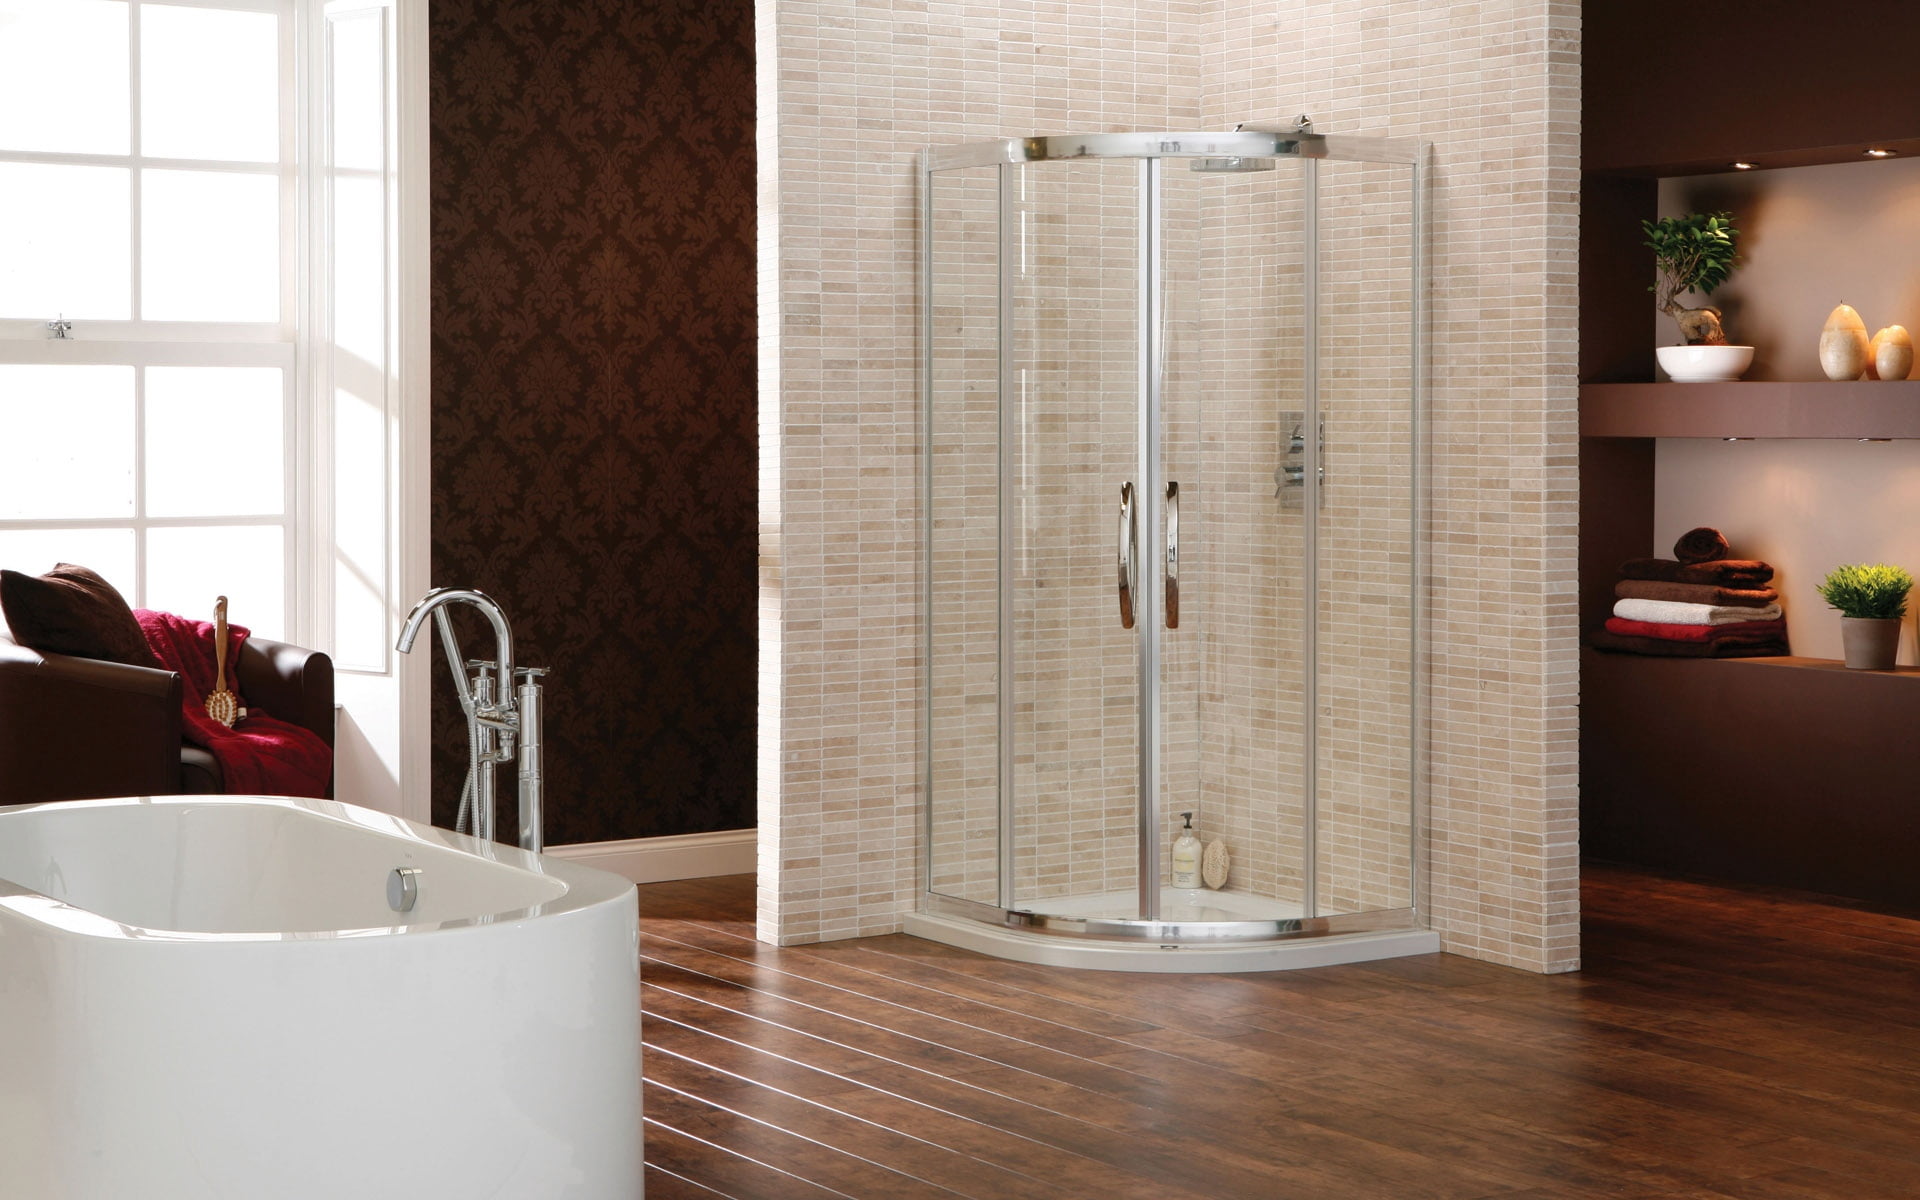 clear glass bathroom enclosure, shower, style, interior, modern